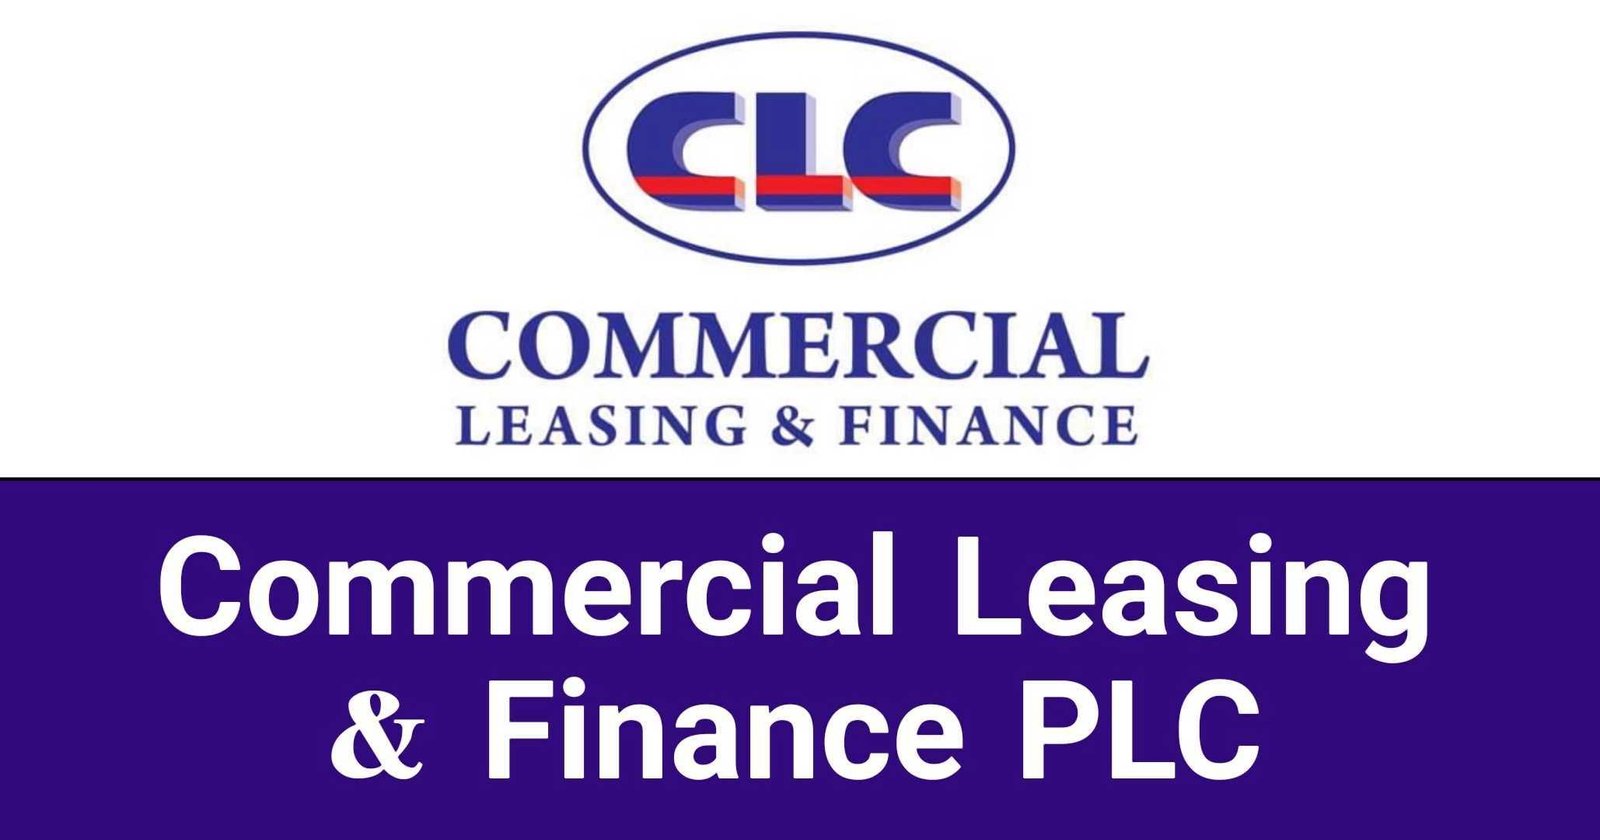 Commercial Leasing & Finance PLC Jobs Vacancies Recruitments